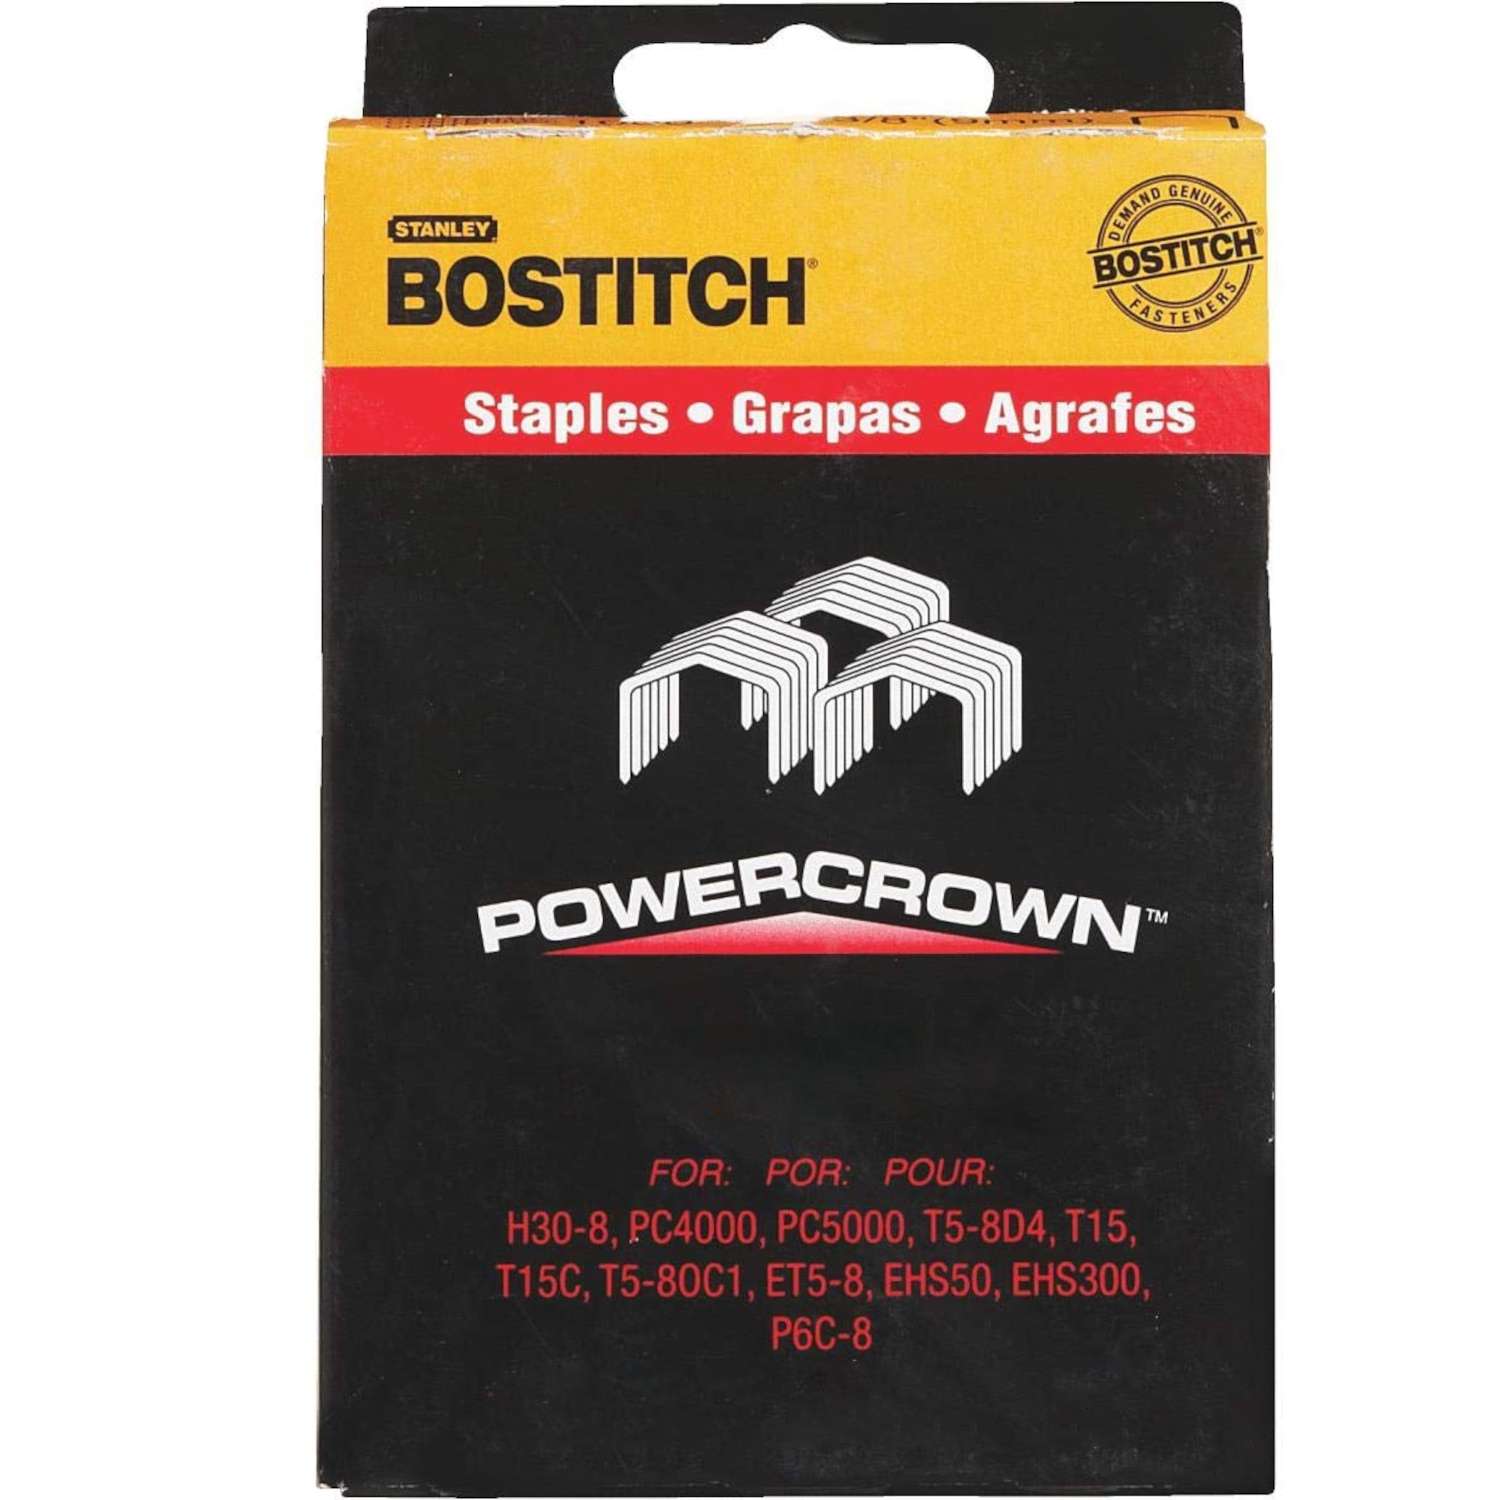 Bostitch Master Mechanic #11 Heavy Duty 1/4" Staples Bostitch Lot of 4 1000 ct 